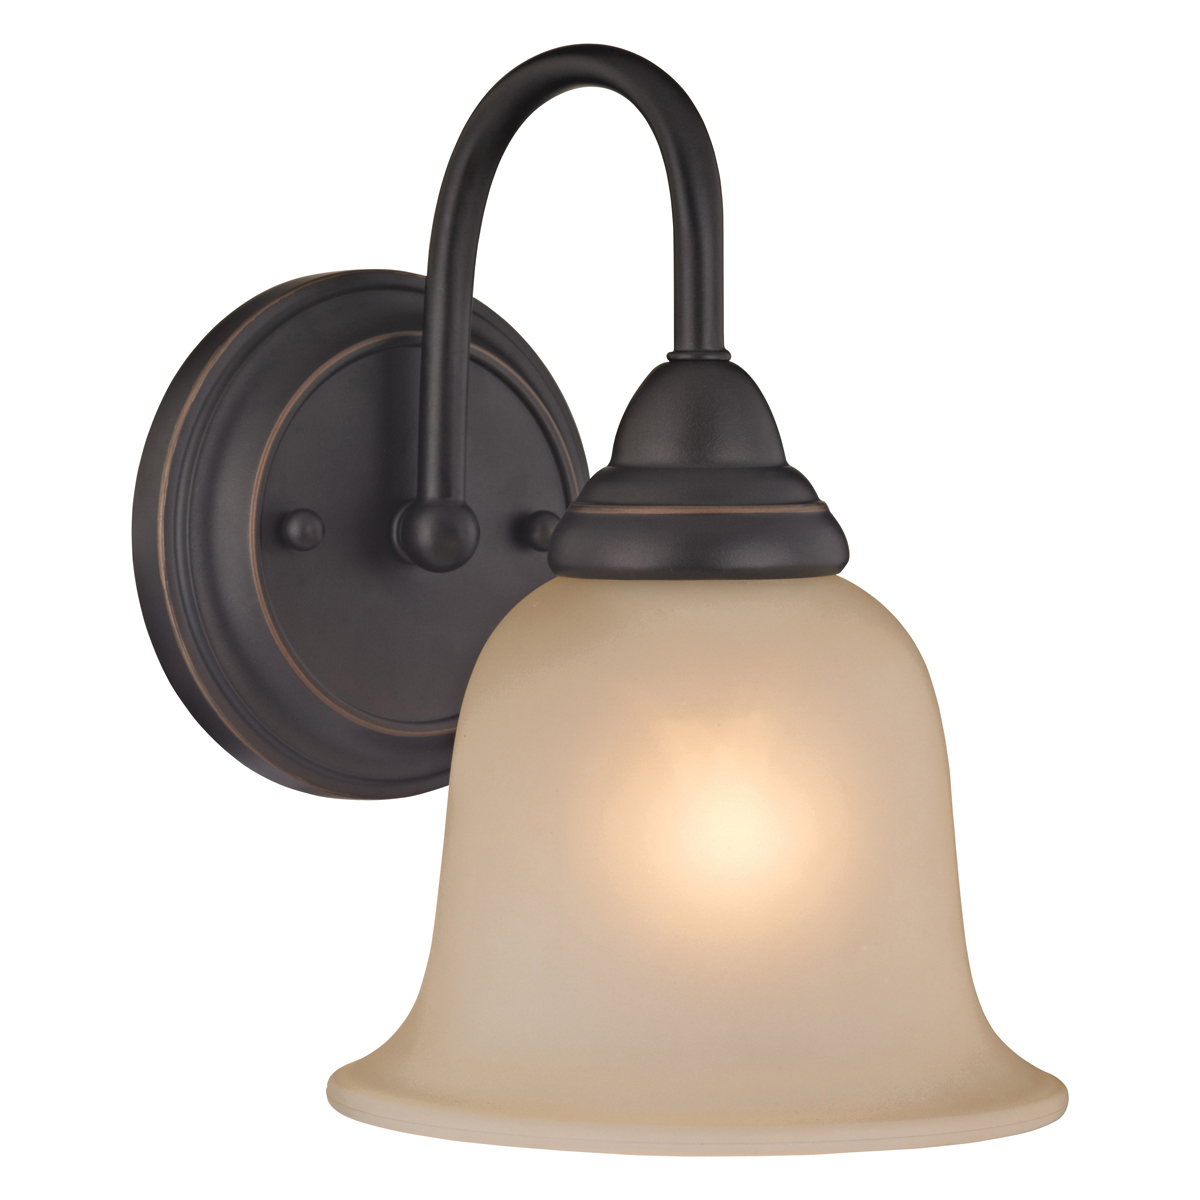 LYB130928-1VL-VB Wall Sconce, 60 W, 1-Lamp, A19 or CFL Lamp, Steel Fixture, Venetian Bronze Fixture